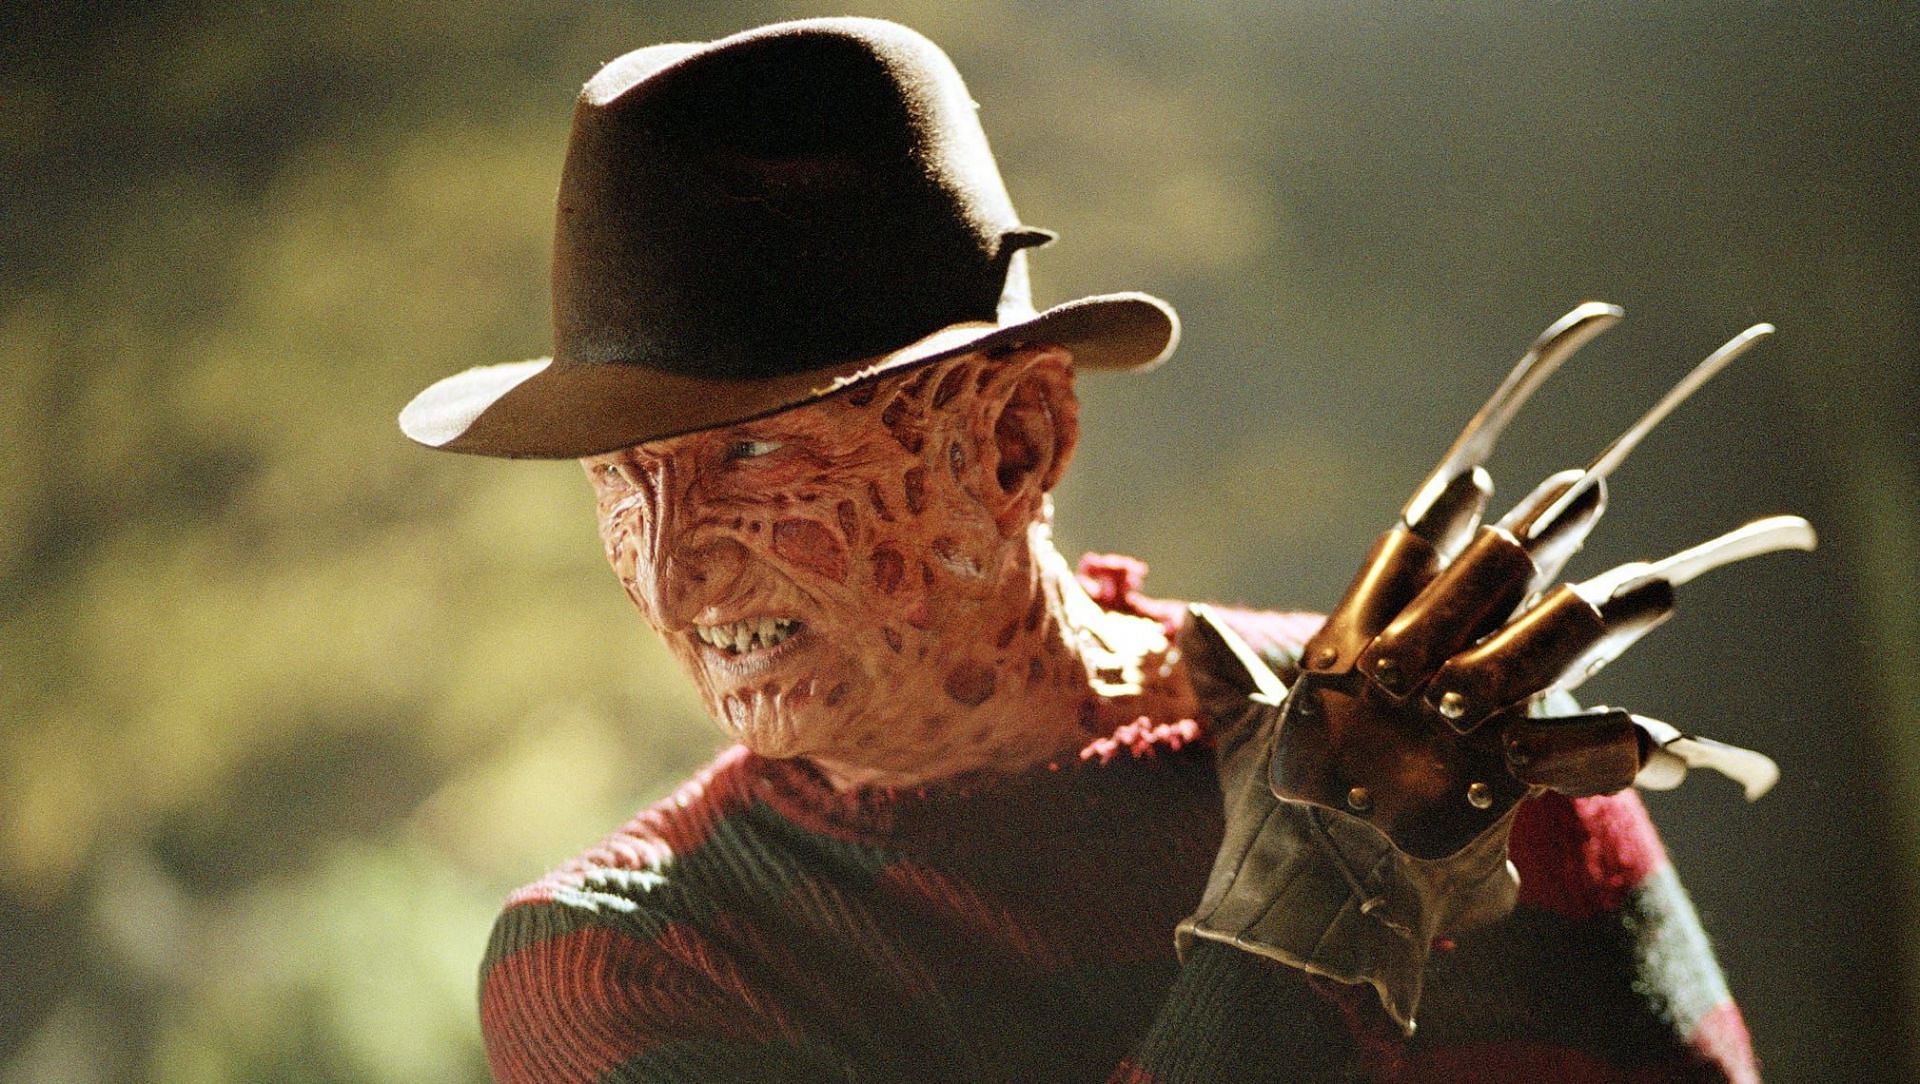 Freddy Krueger in action (image via New Line Cinema)